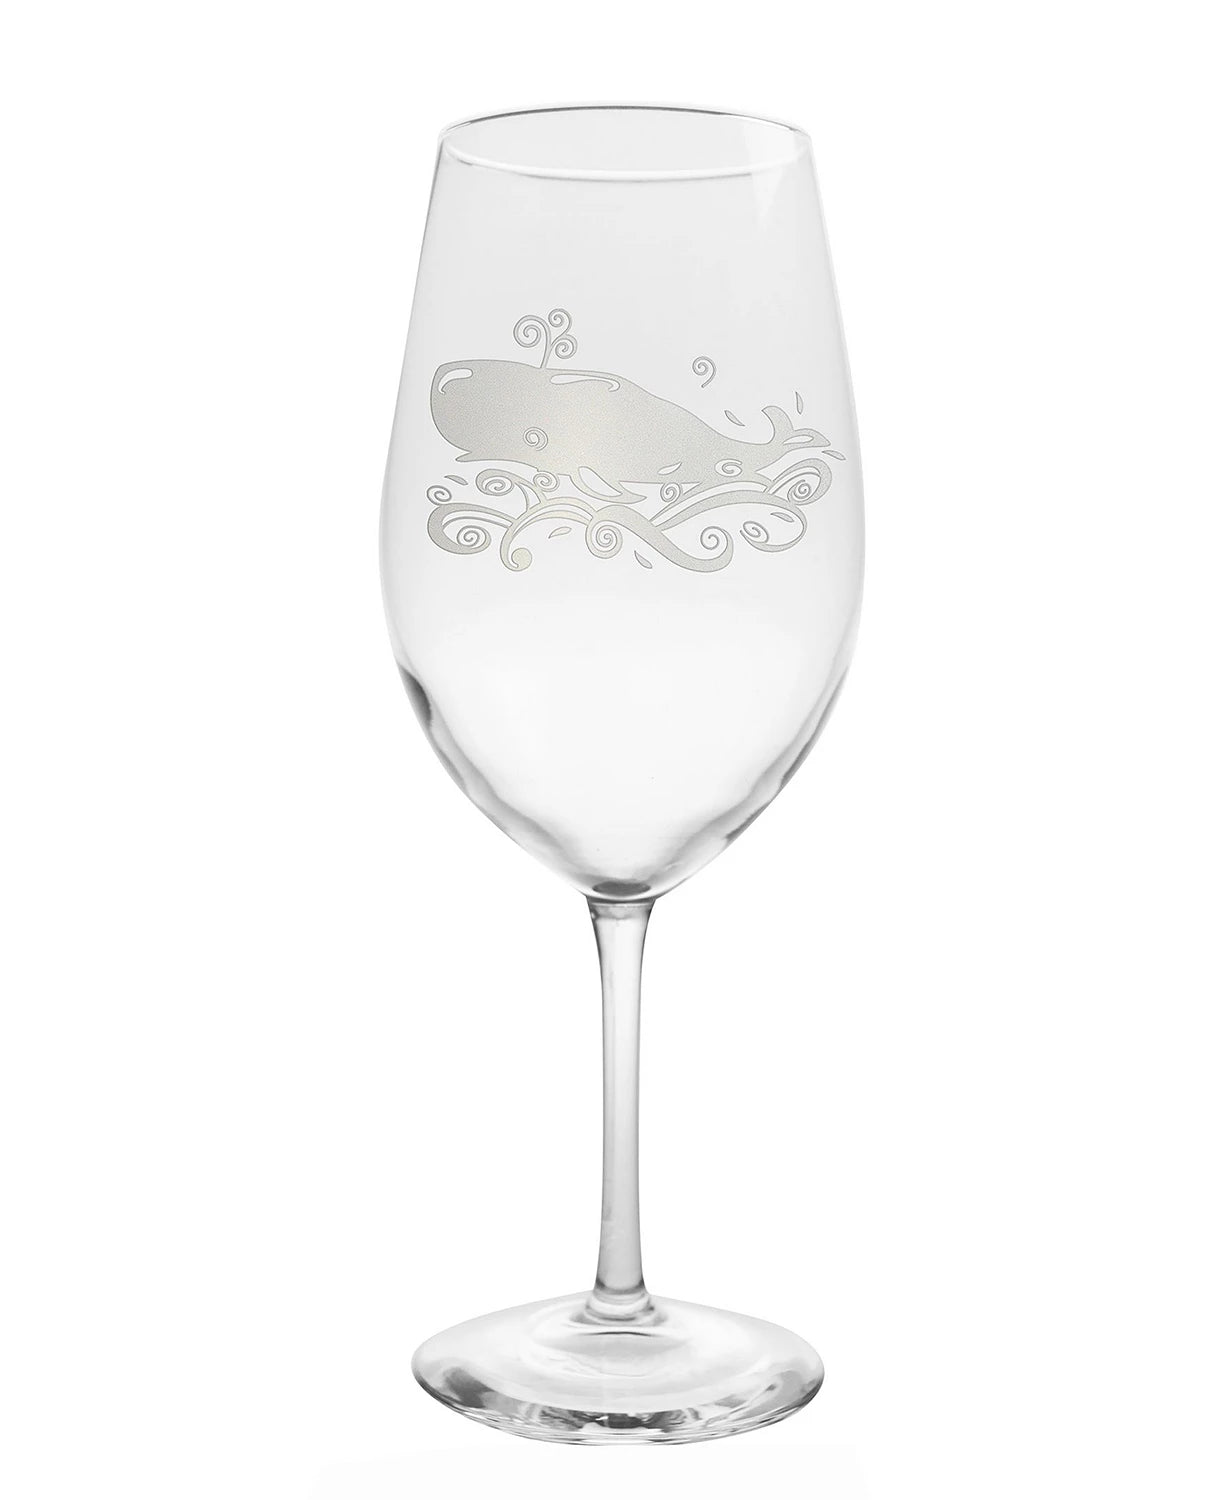 whale wine glass